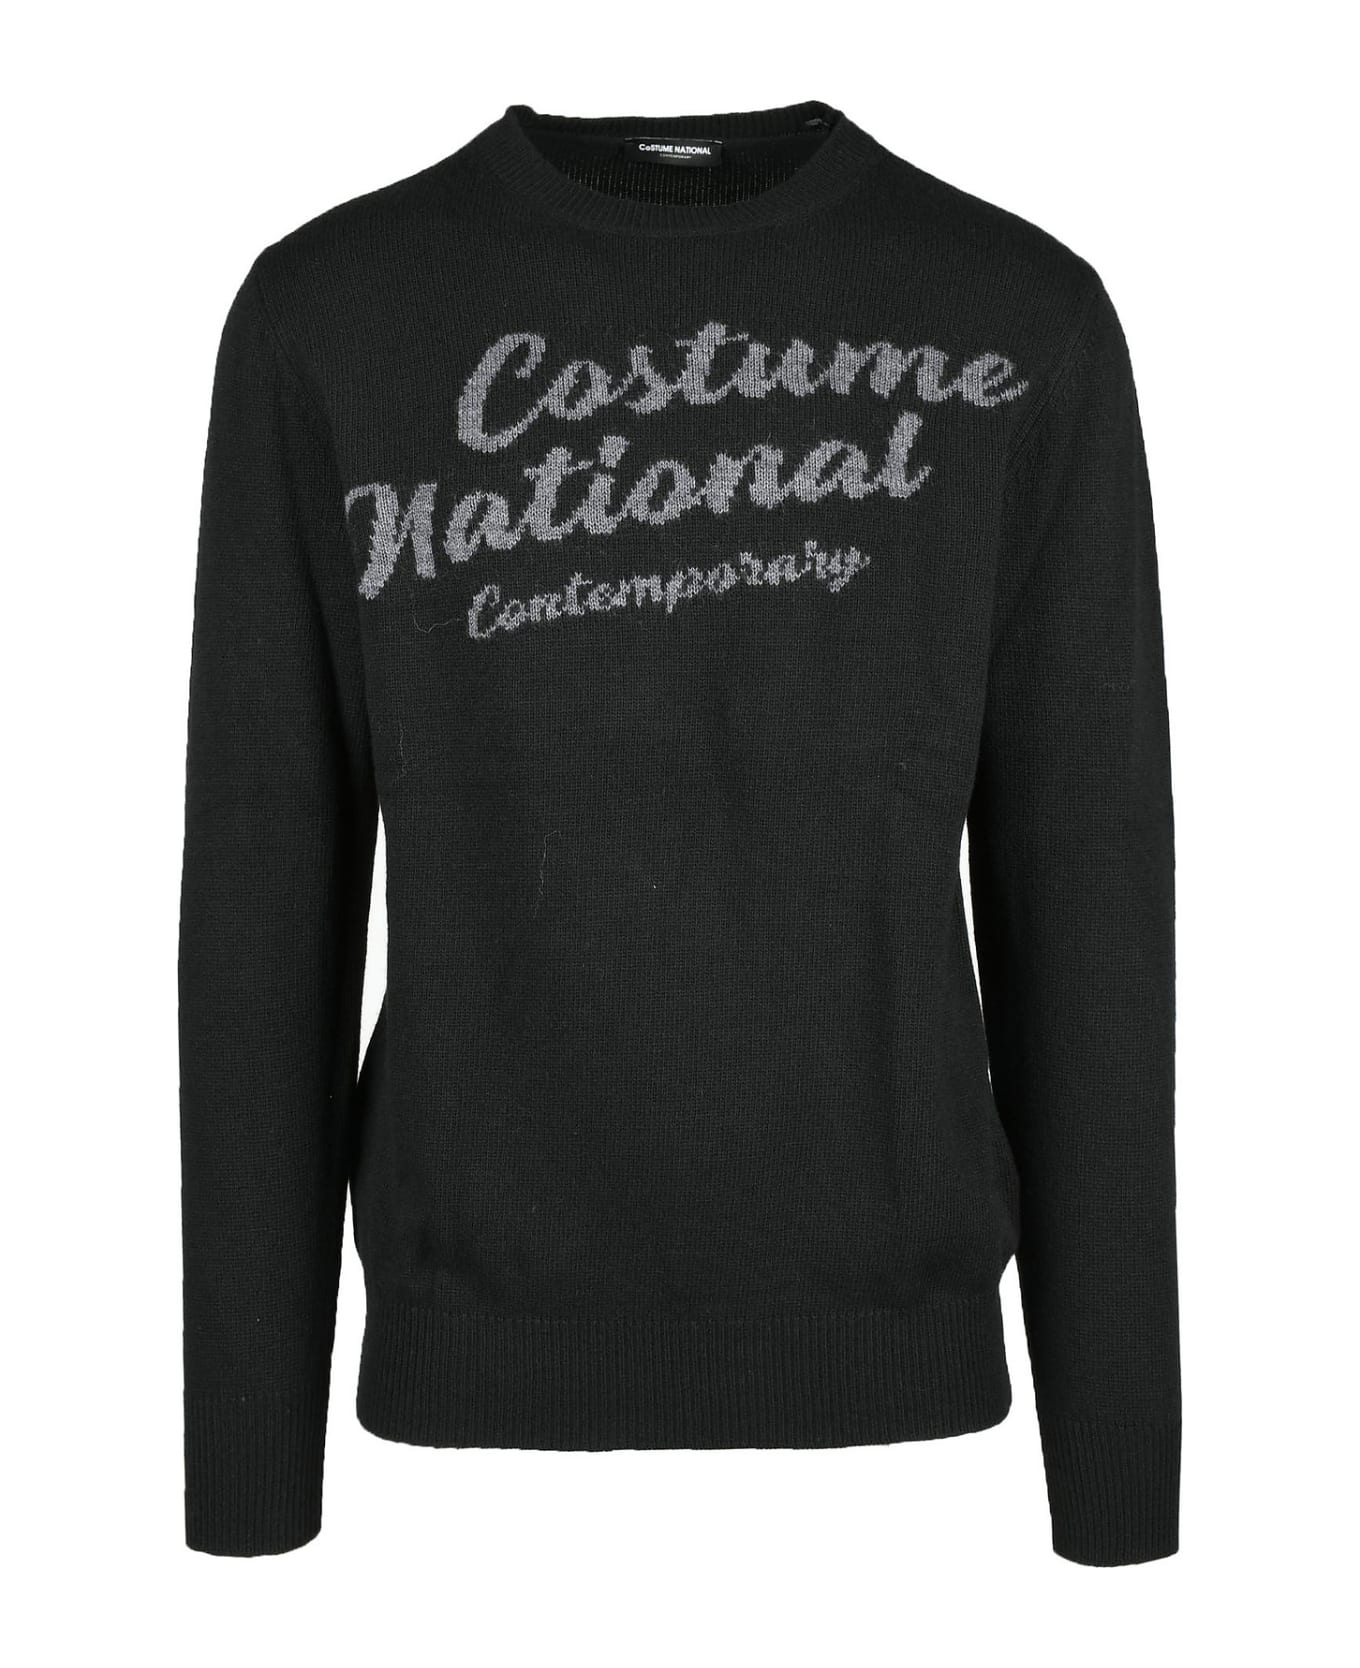 CoSTUME NATIONAL CONTEMPORARY Men's Black Sweater - Black